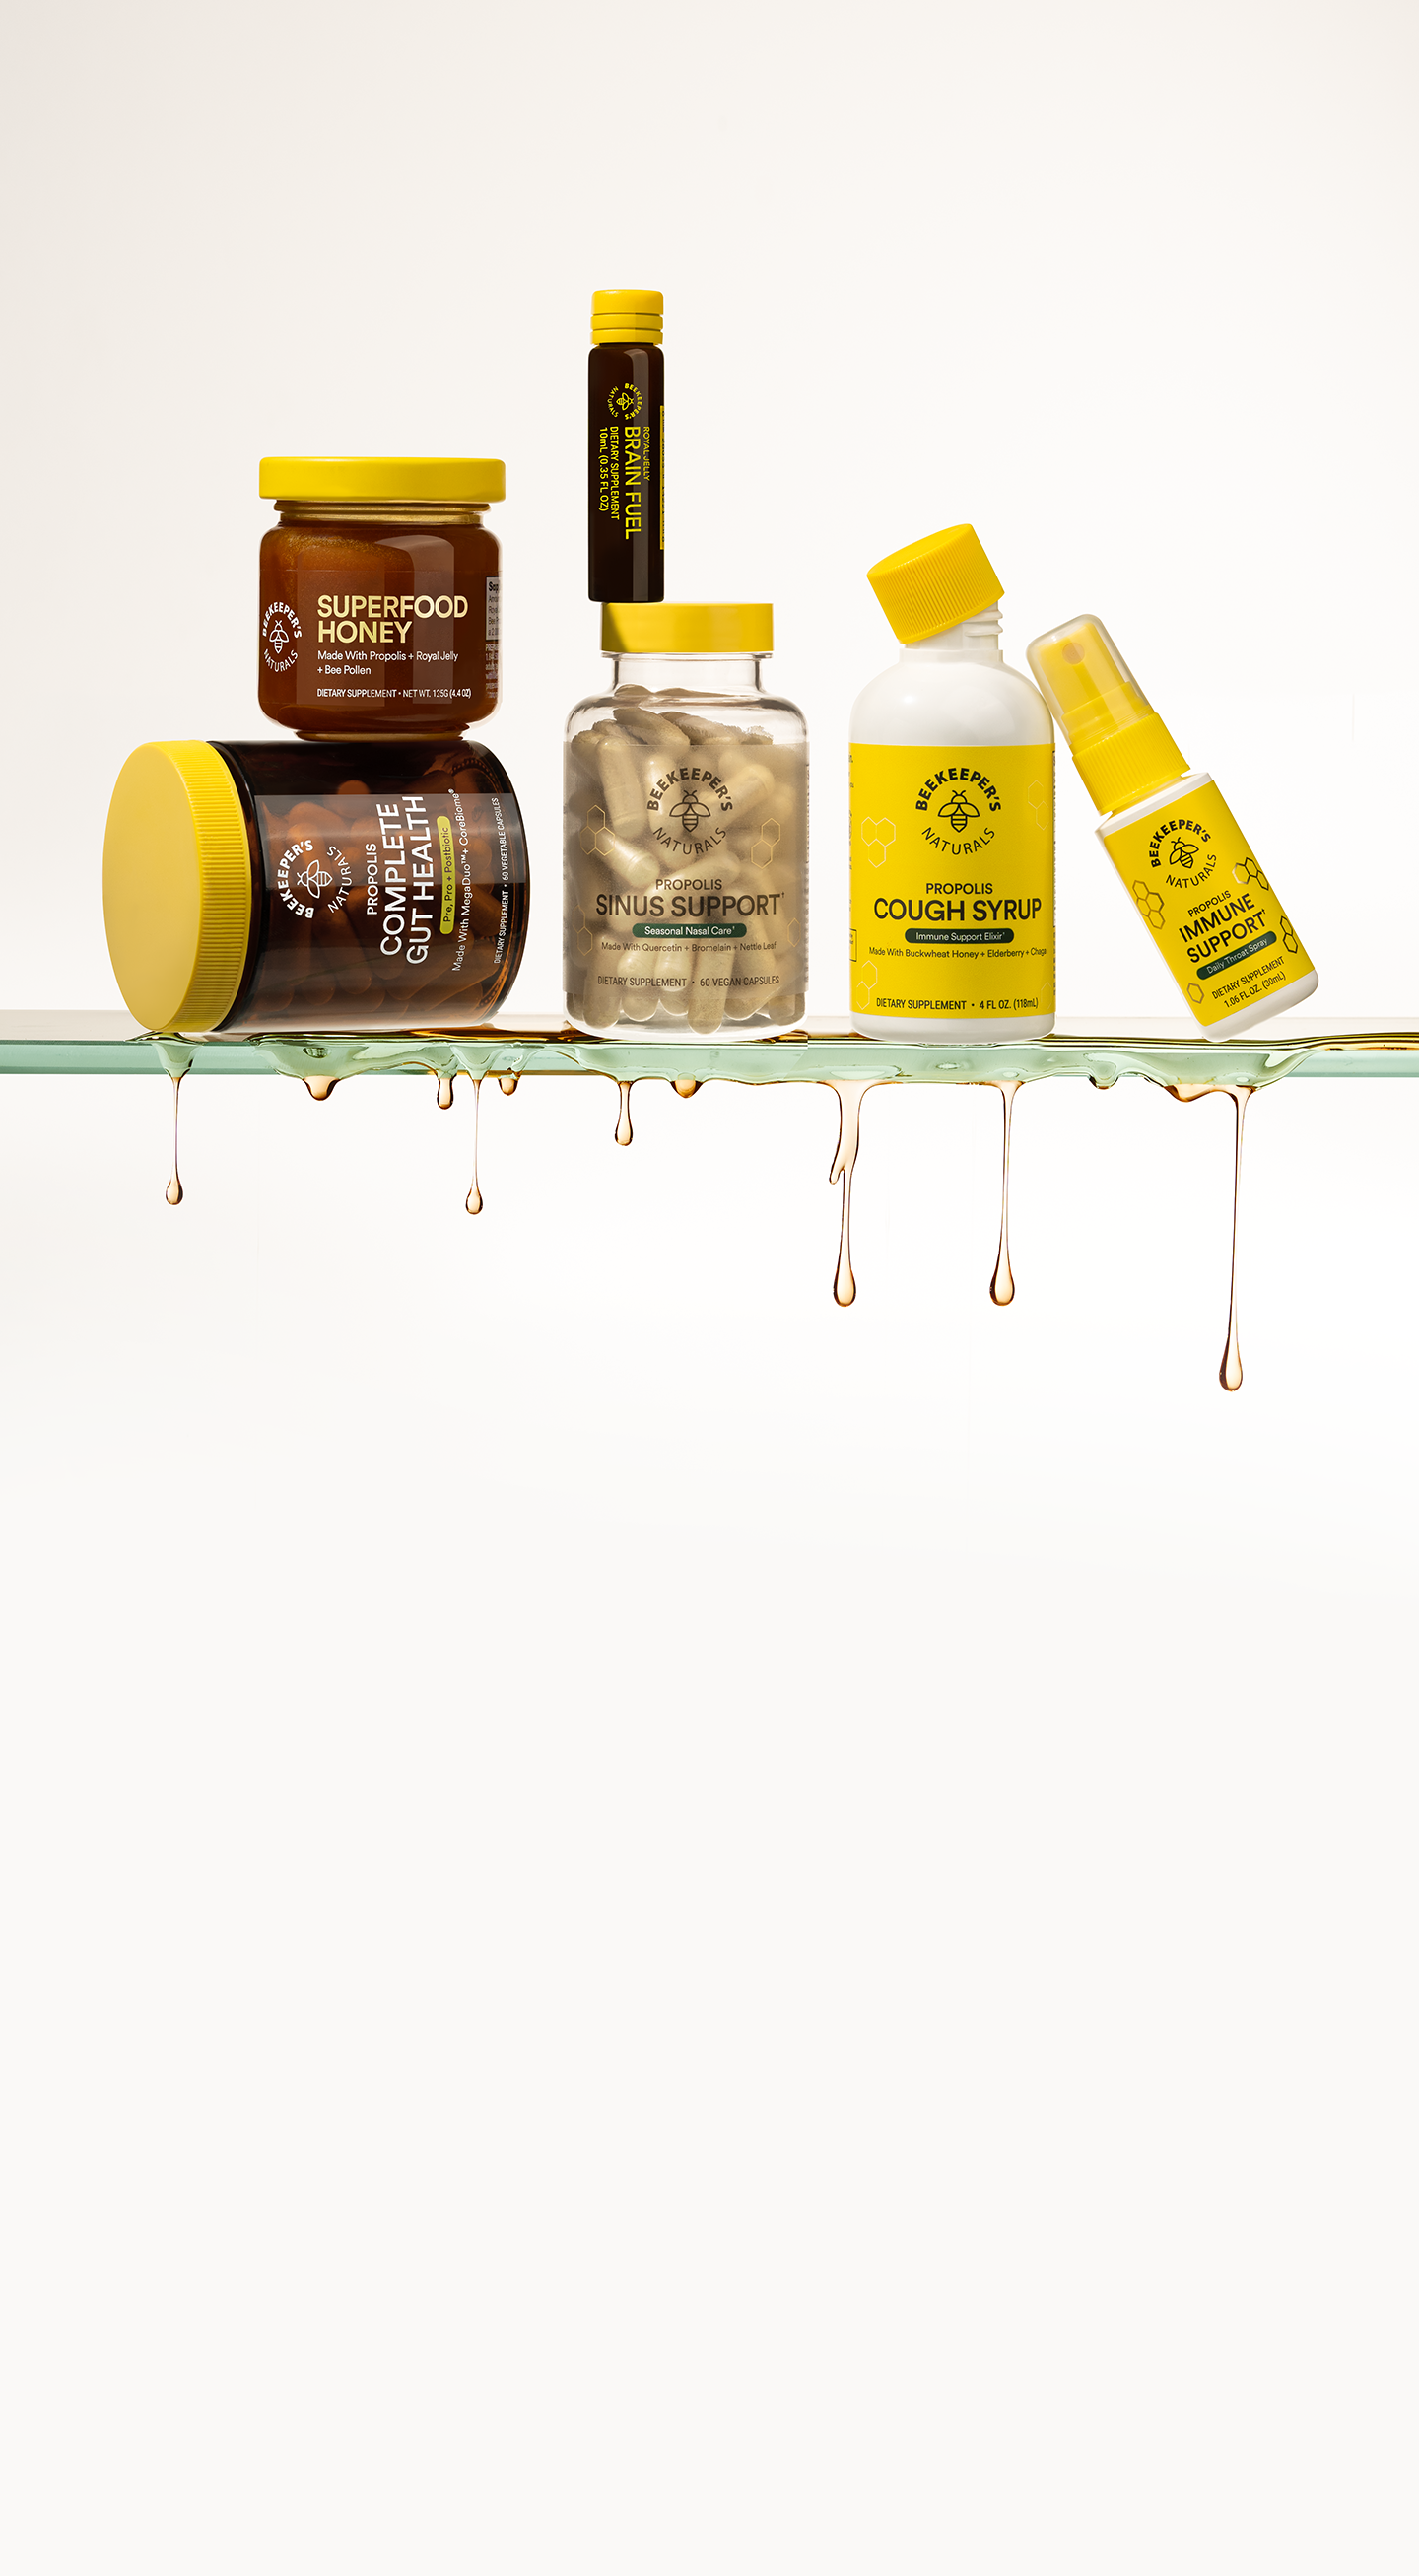 Beekeeper's Naturals: Celebrity-Loved Wellness Brand